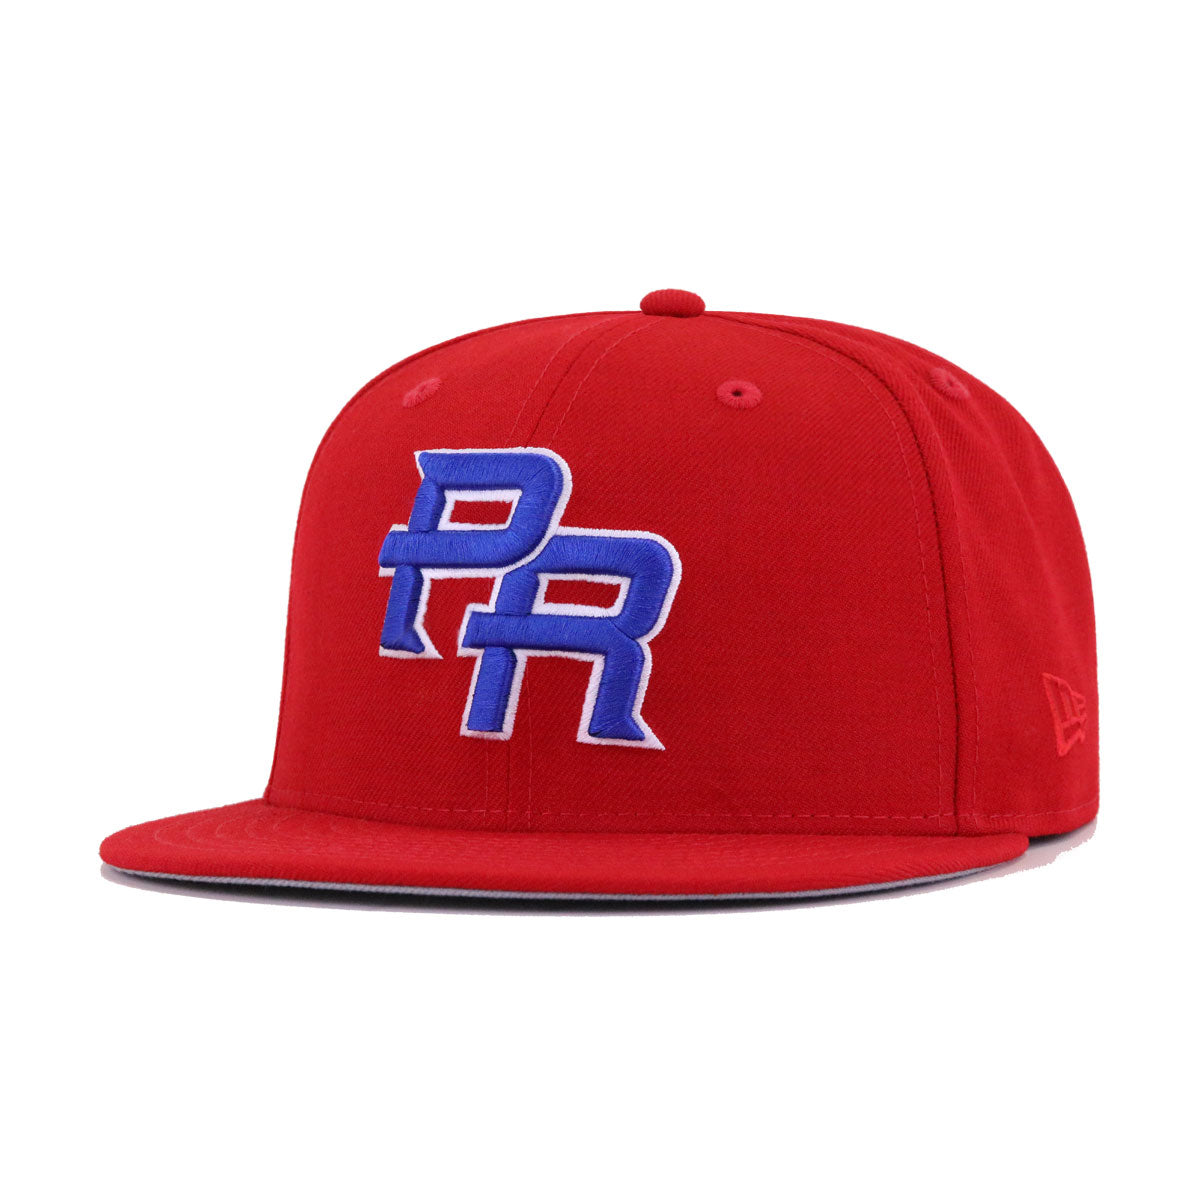 puerto rico world baseball classic hat